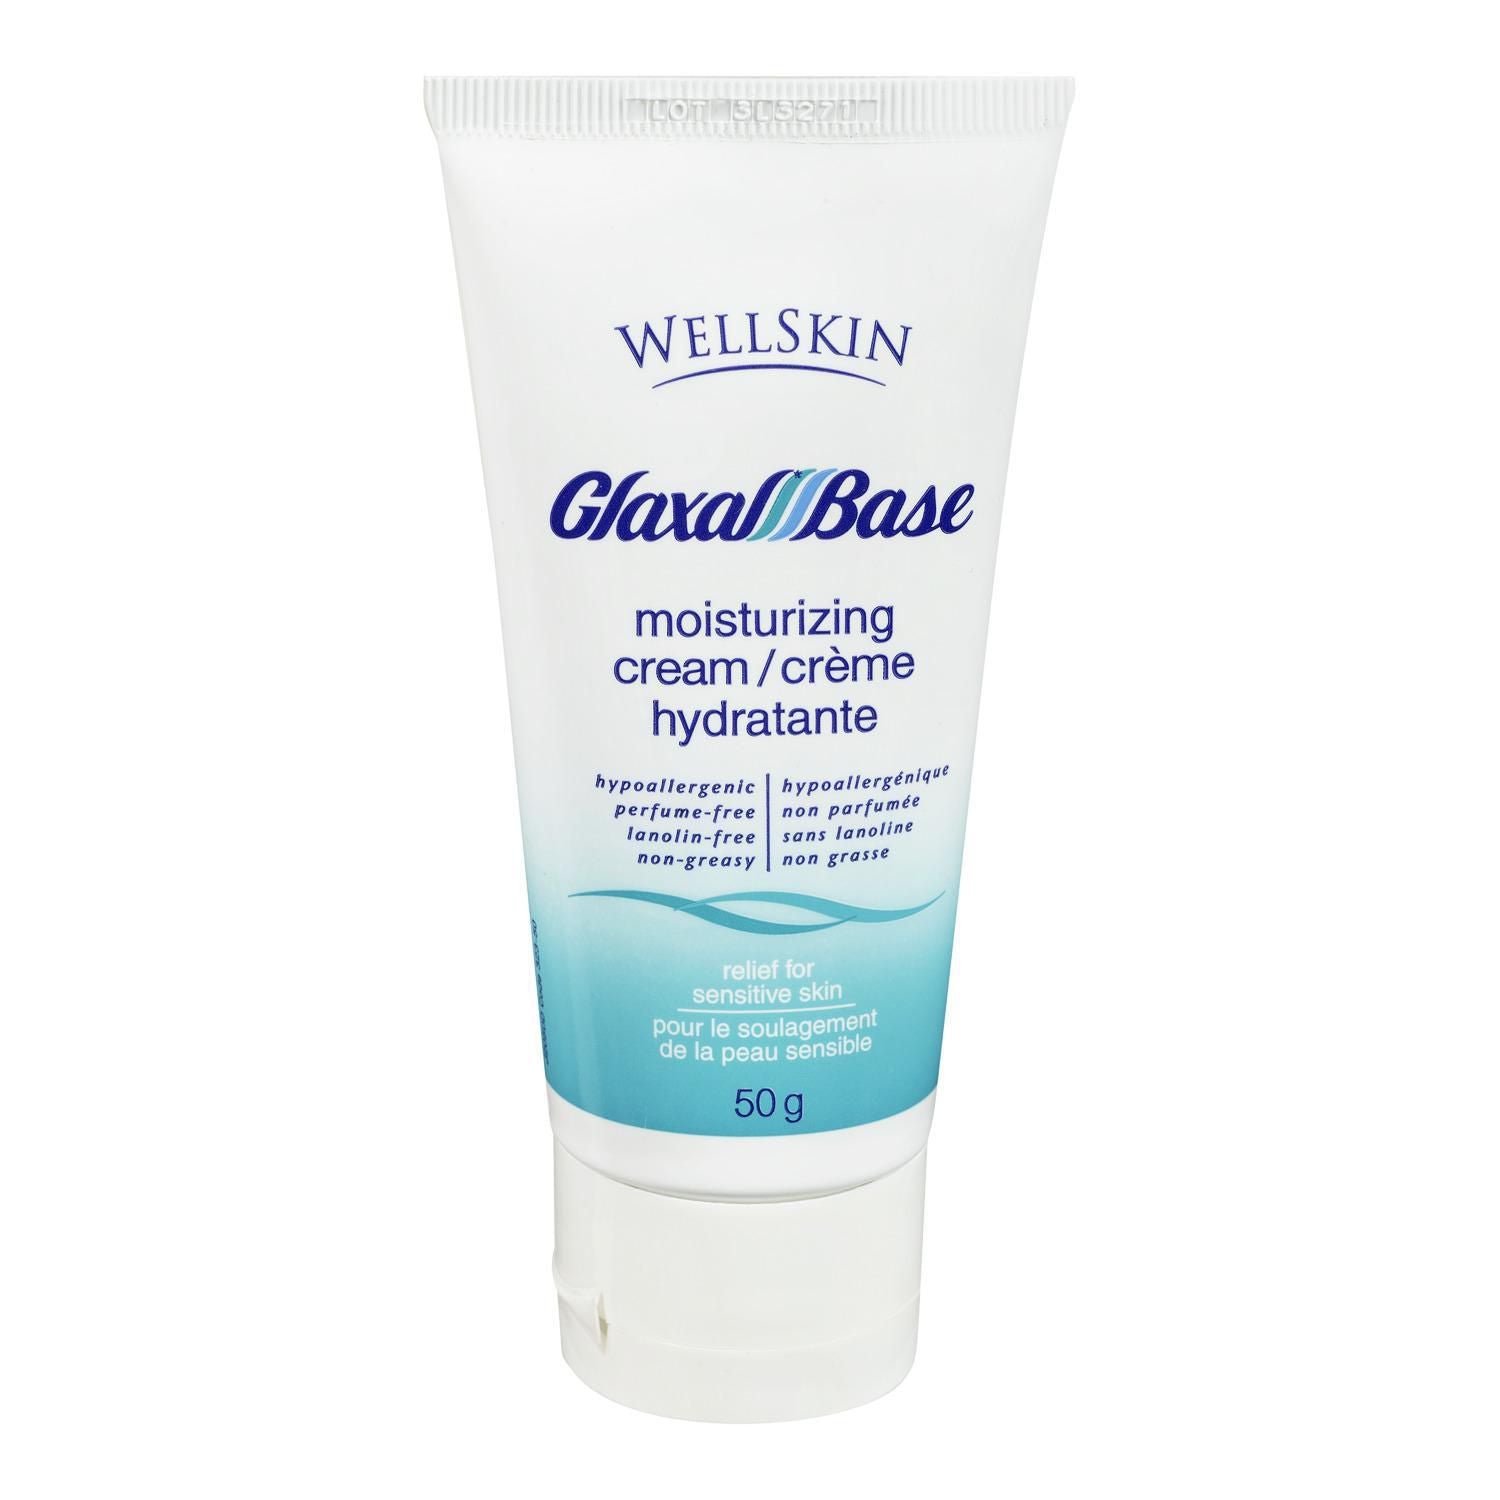 Glaxal Base Moisturizing Cream For Sensitive Skin